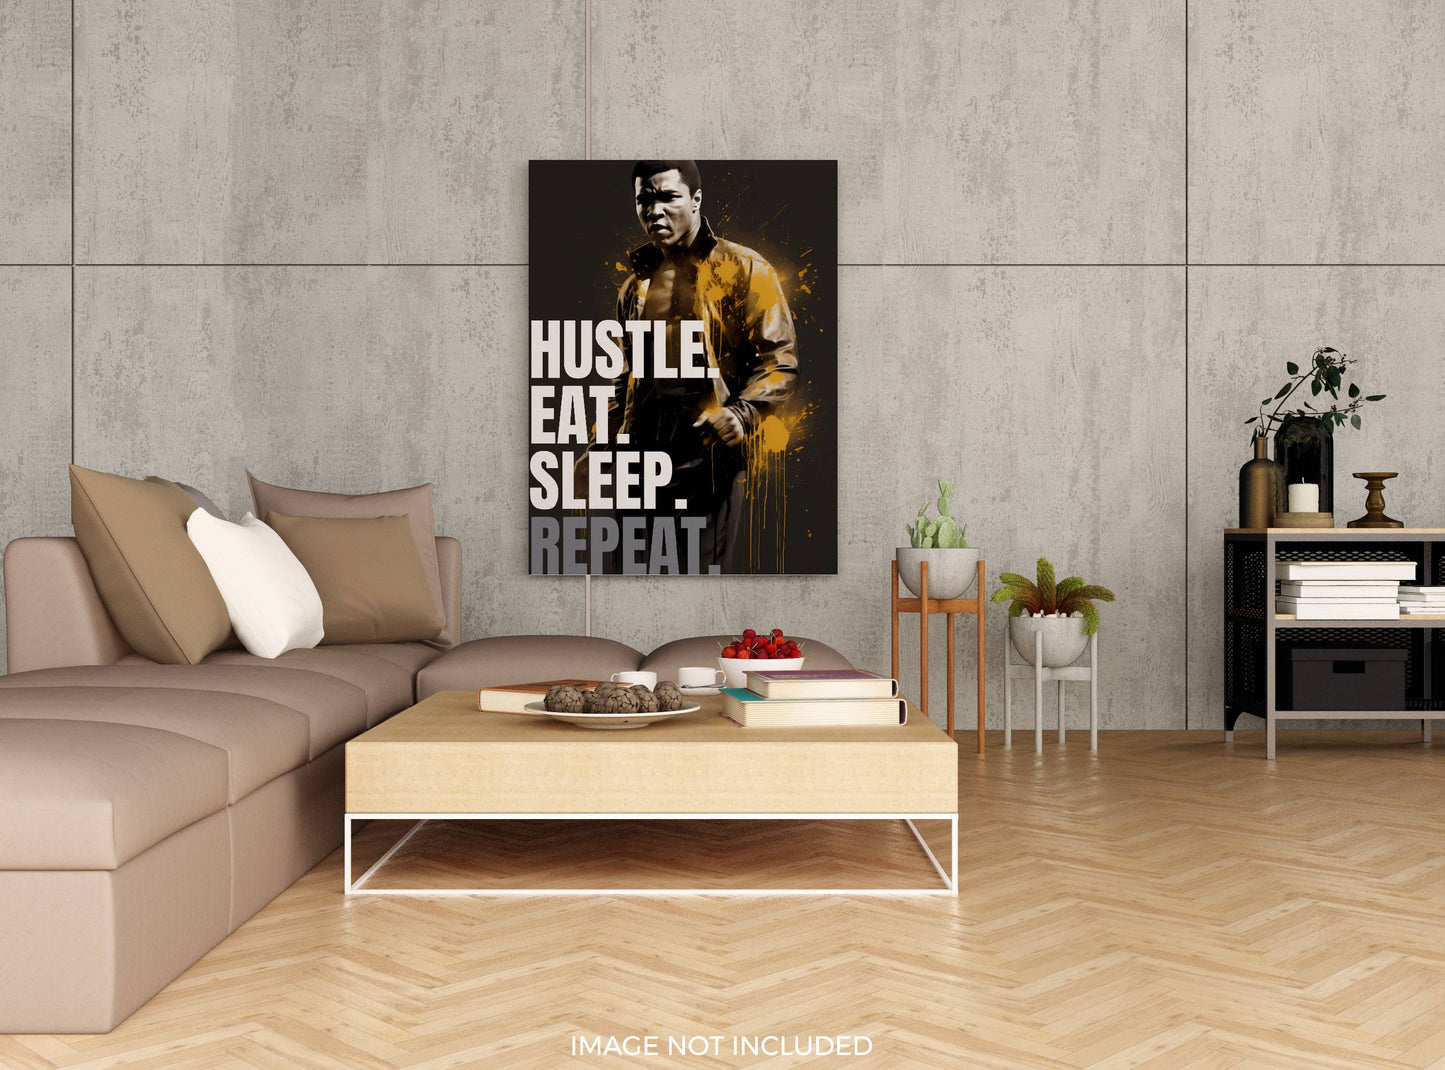 Hustle Muhammad Ali Motivational Wall Art - Front Angle 2 